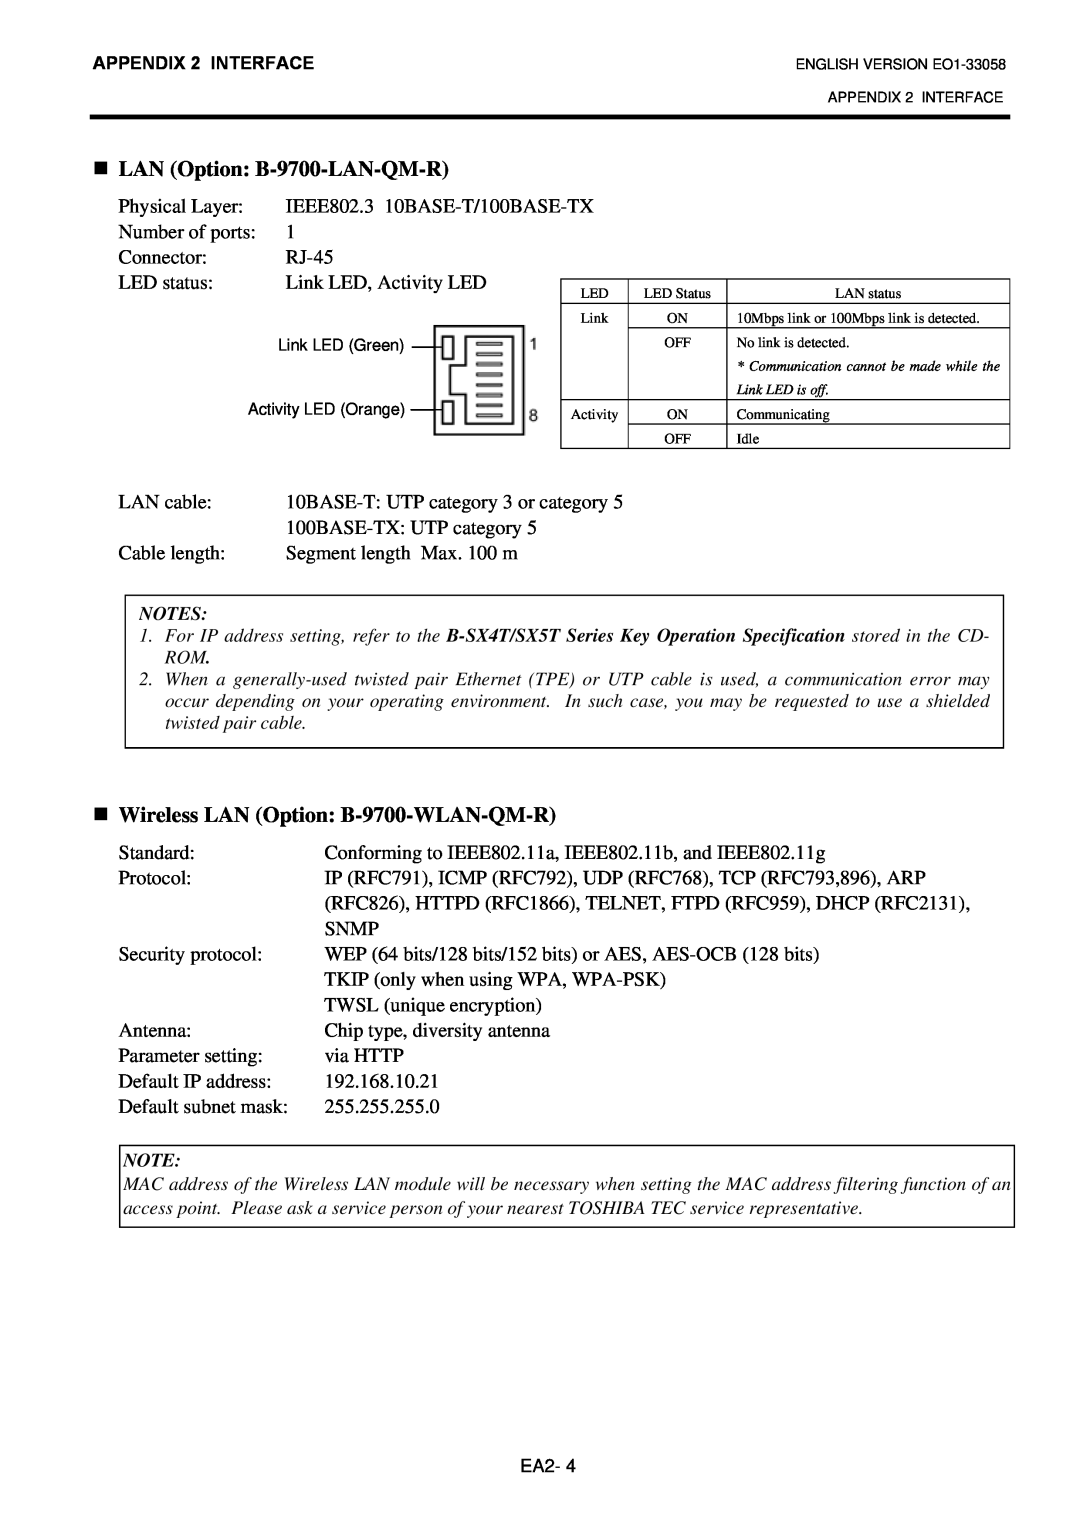 Toshiba B-SX4T LAN Option B-9700-LAN-QM-R, Wireless LAN Option B-9700-WLAN-QM-R, 10BASE-T UTP category 3 or category 